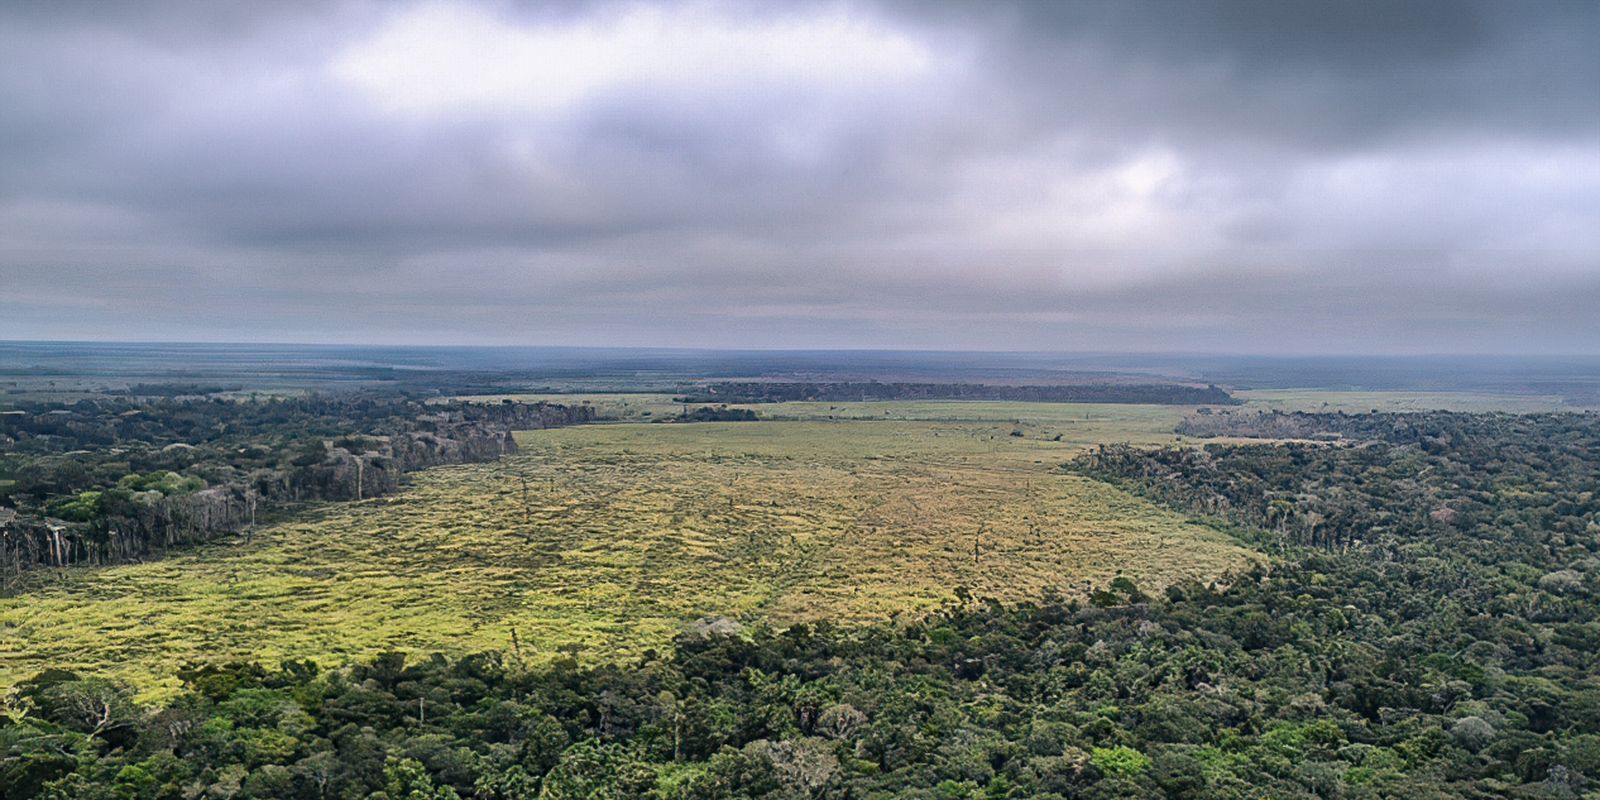 ipam-e-banco-mundial-lancam-plataforma-sobre-desmatamento-na-amazonia